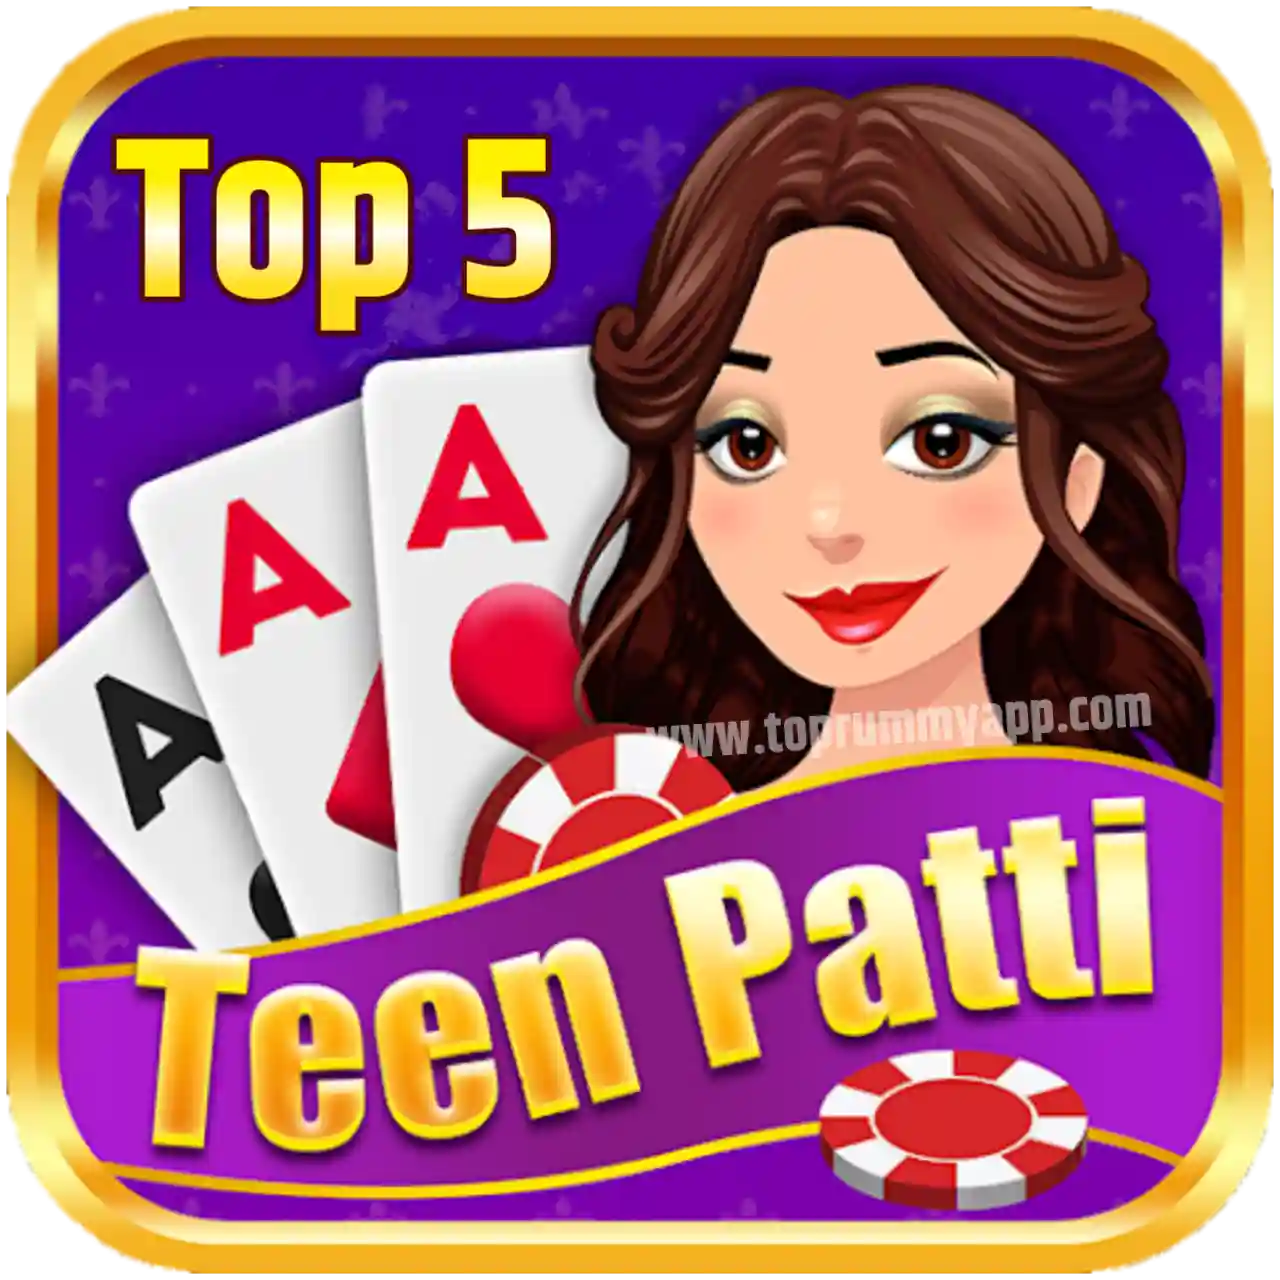 Top 5 Teen Patti App List - Top 5 Teen Patti App List ₹41 Bonus